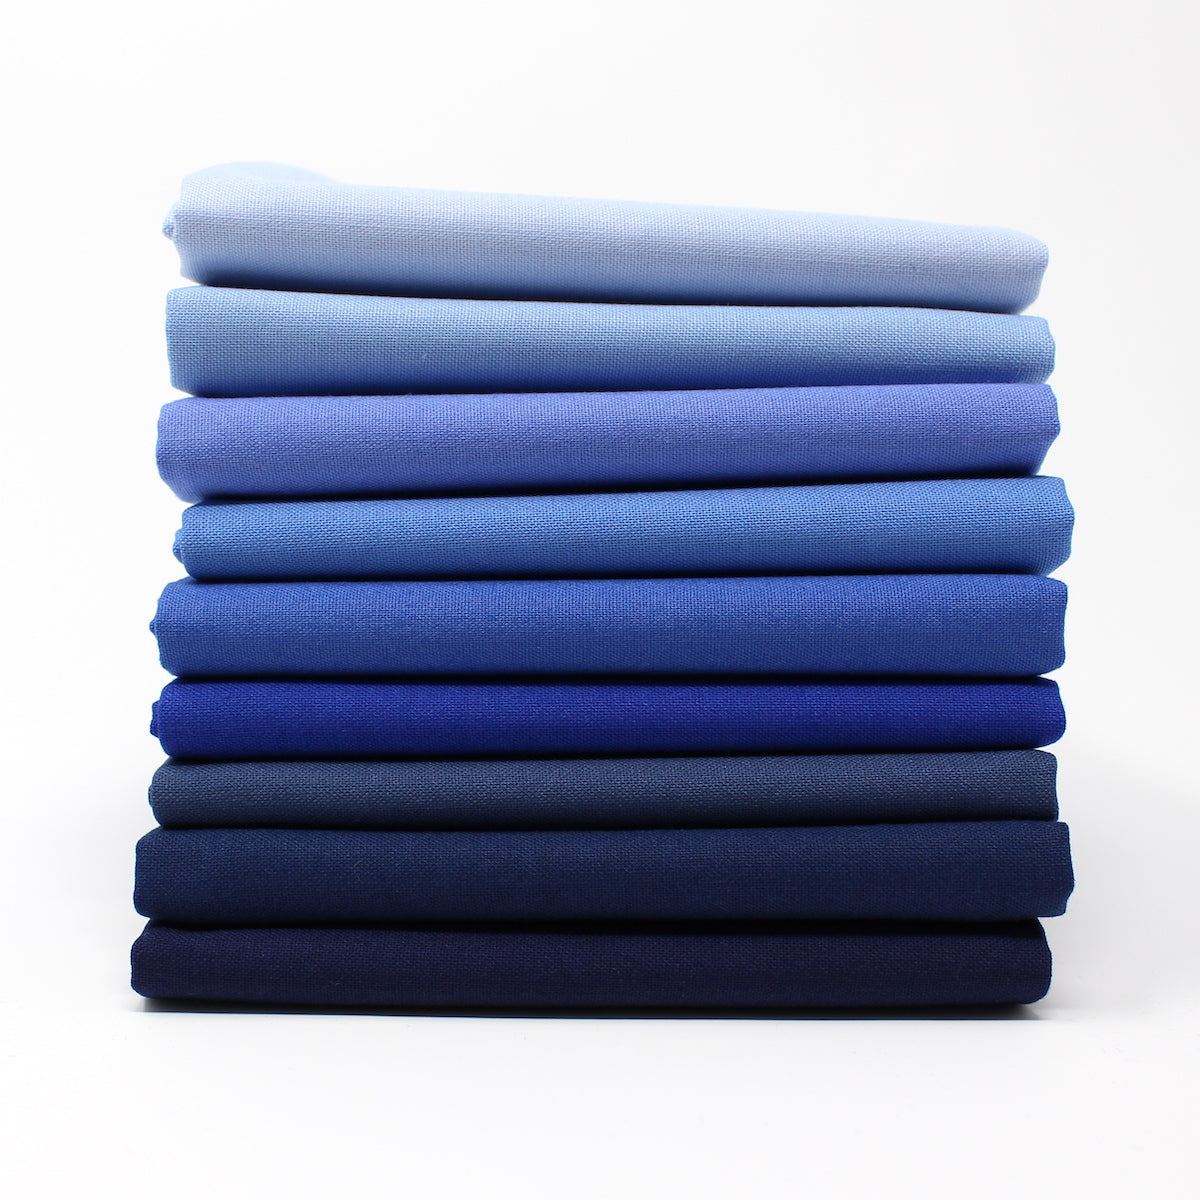 Robert Kaufman Kona Cotton Solids True Blue Fat Quarter Bundle Fabric